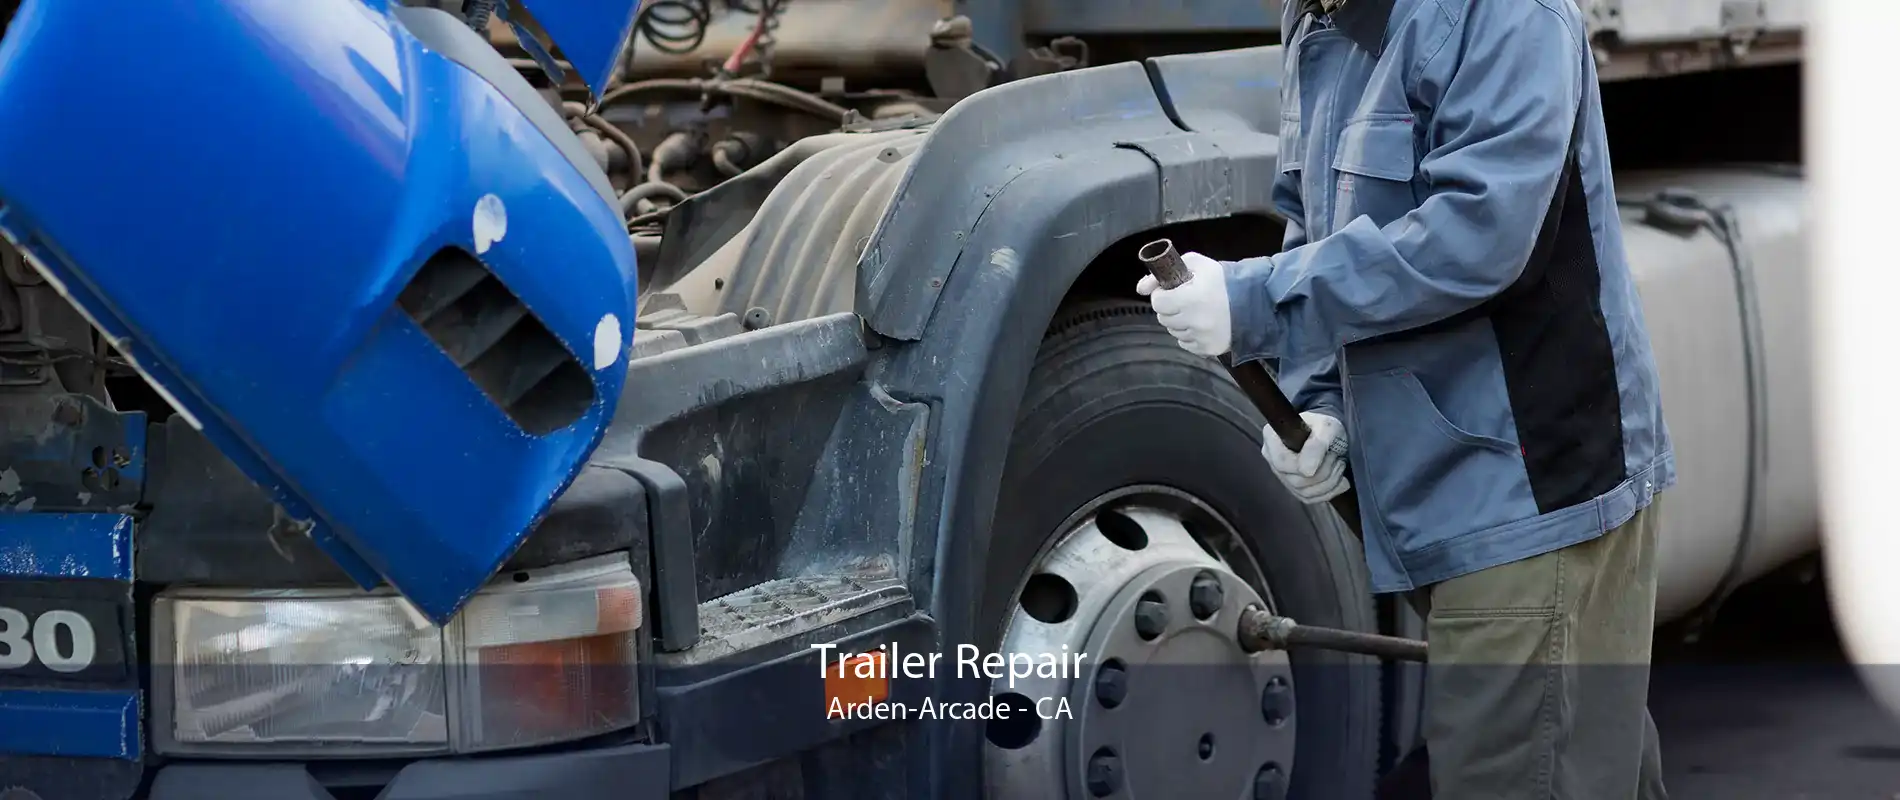 Trailer Repair Arden-Arcade - CA